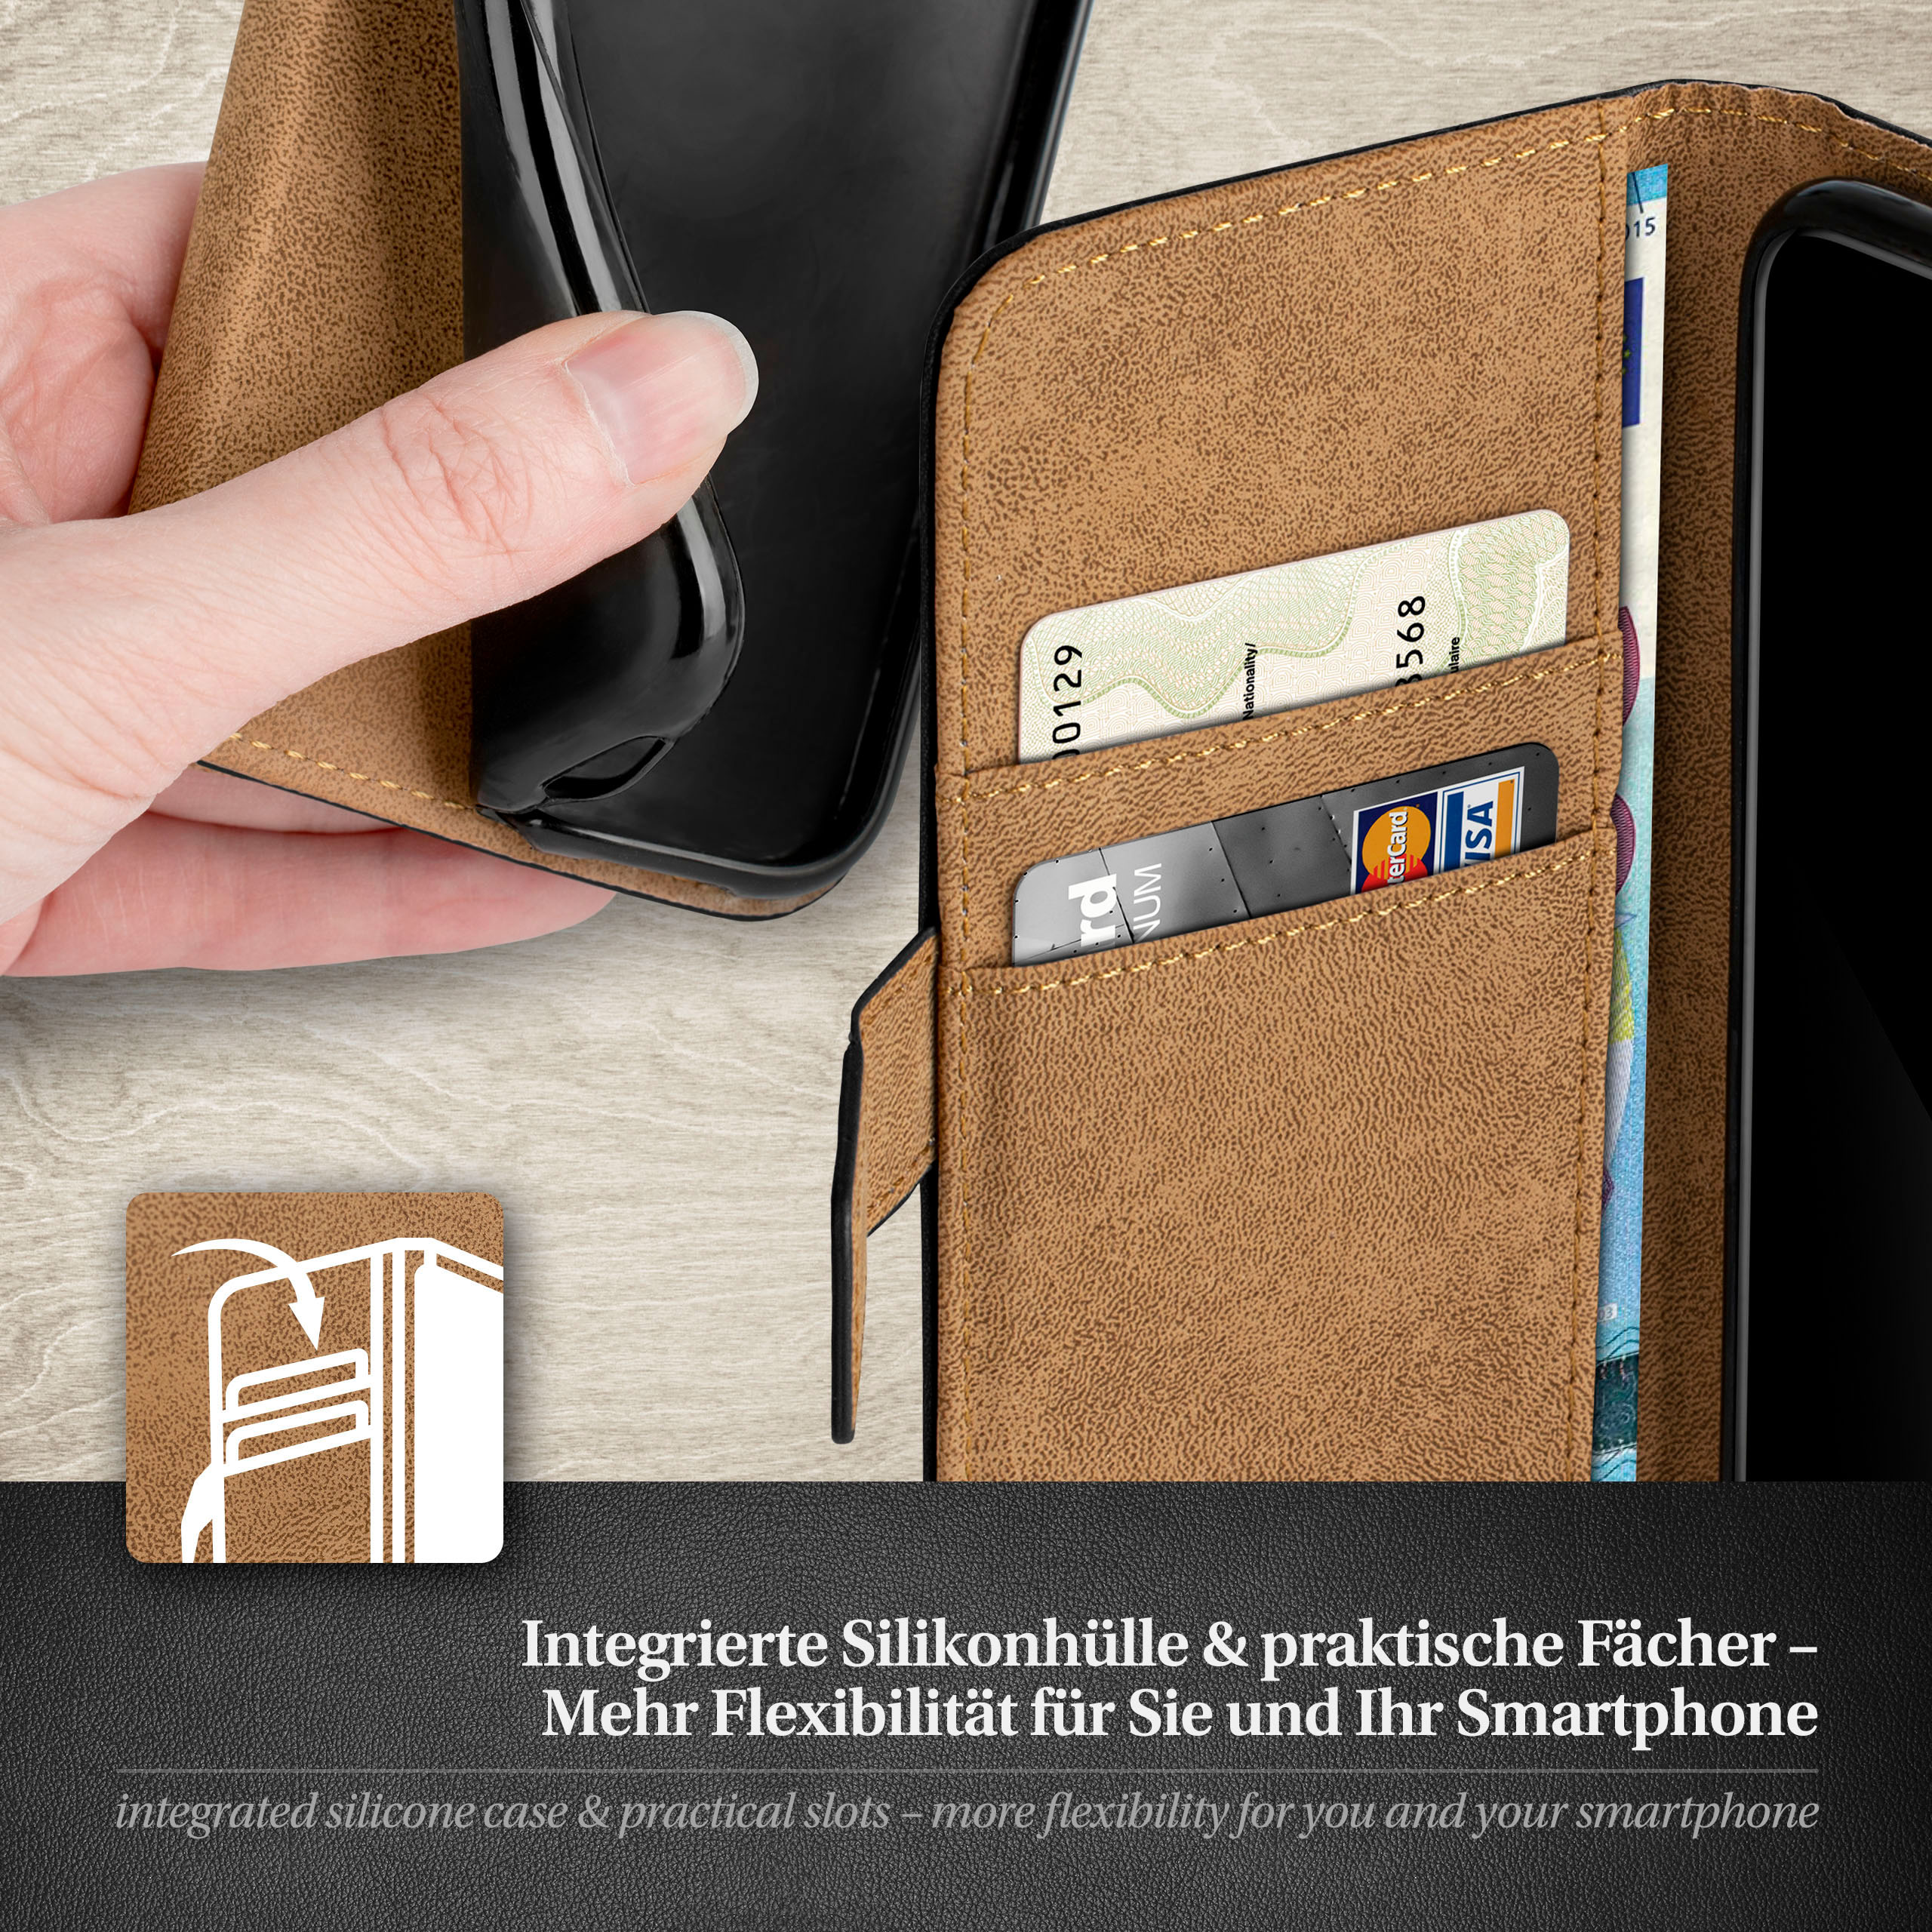 MOEX Book Case, Bookcover, Samsung, S20 Ultra Galaxy / Deep-Black 5G